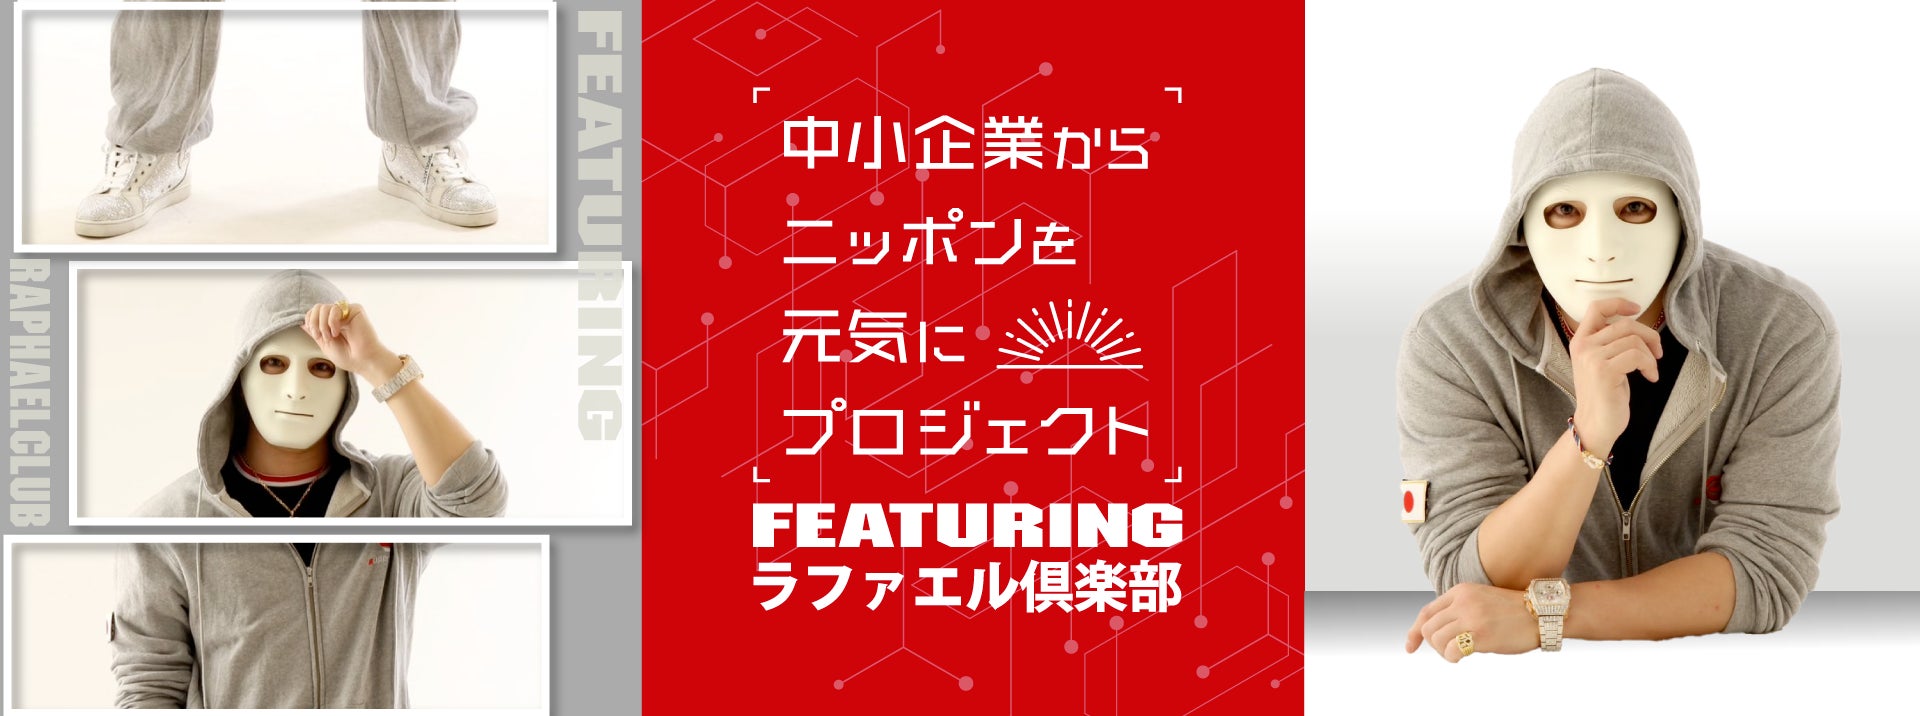 FC刈谷応援アンバサダー西葉瑞希さん「 つかう.meet FES 〜GO！MIKAWA！〜」内 PitchFM公開生放送に出演決定